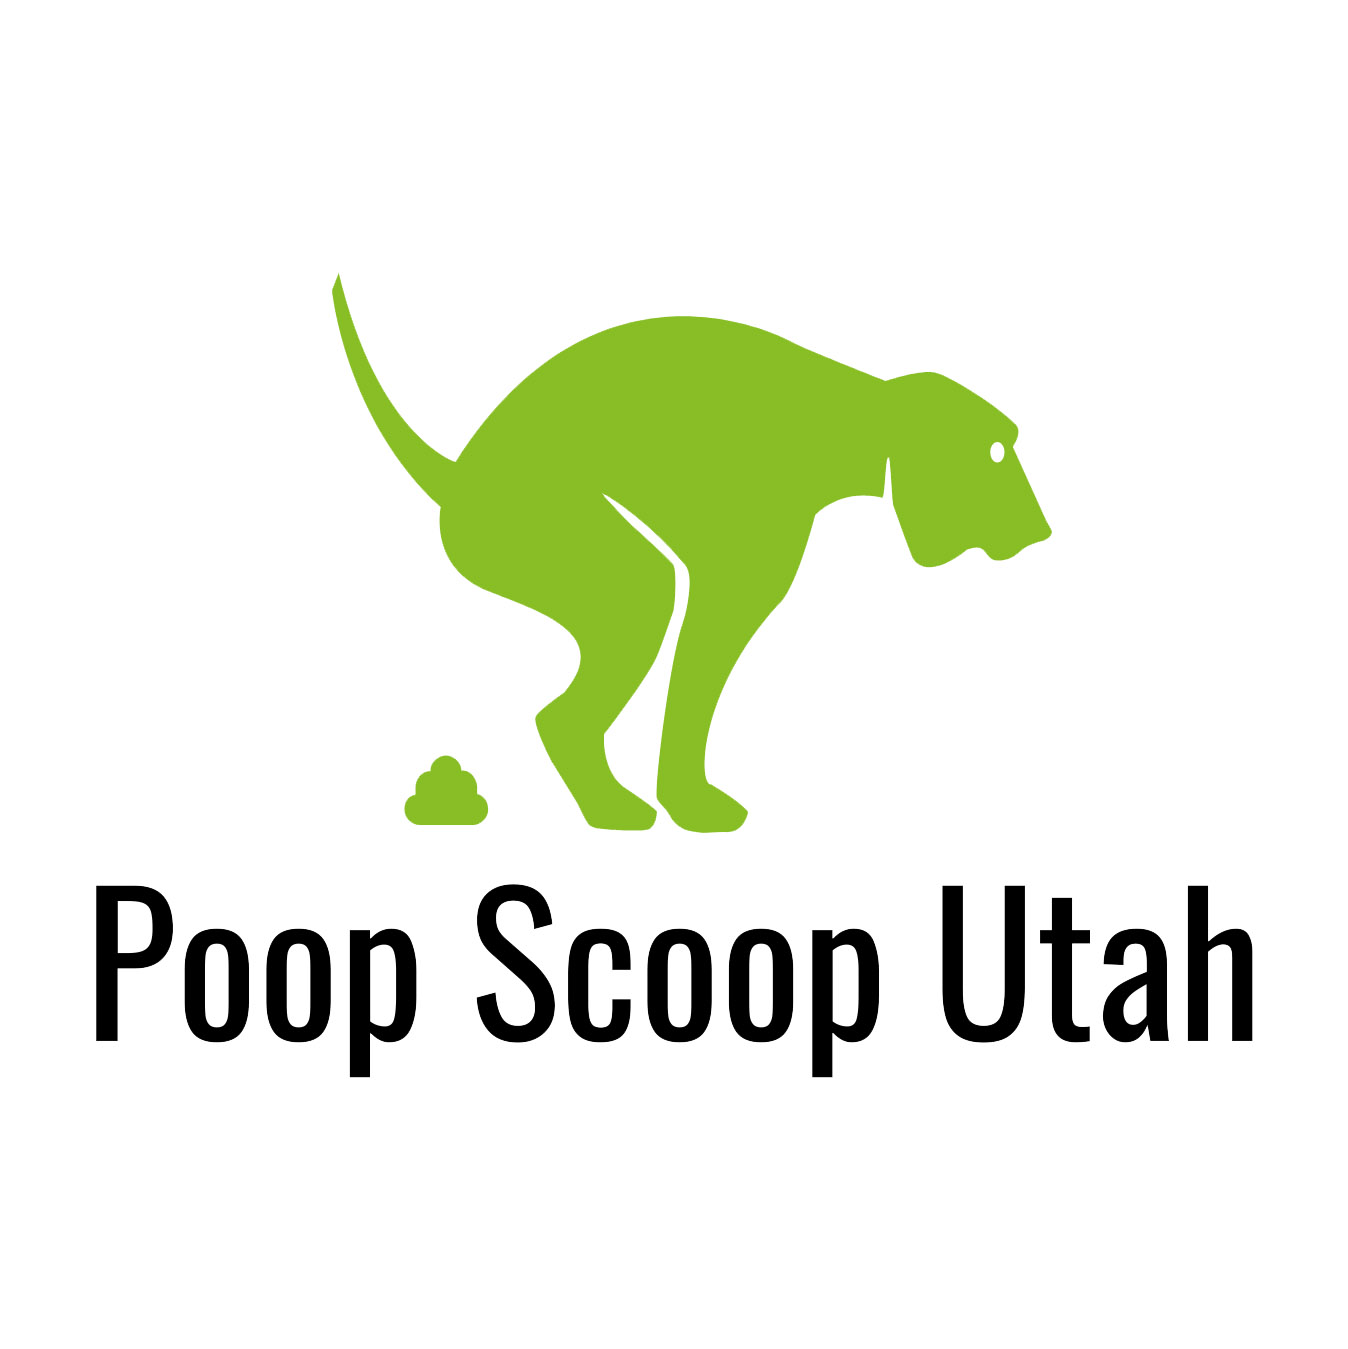 Pooper scooper service - Poop Scoop Utah's logo - A green dog squatting over a pile of poo.